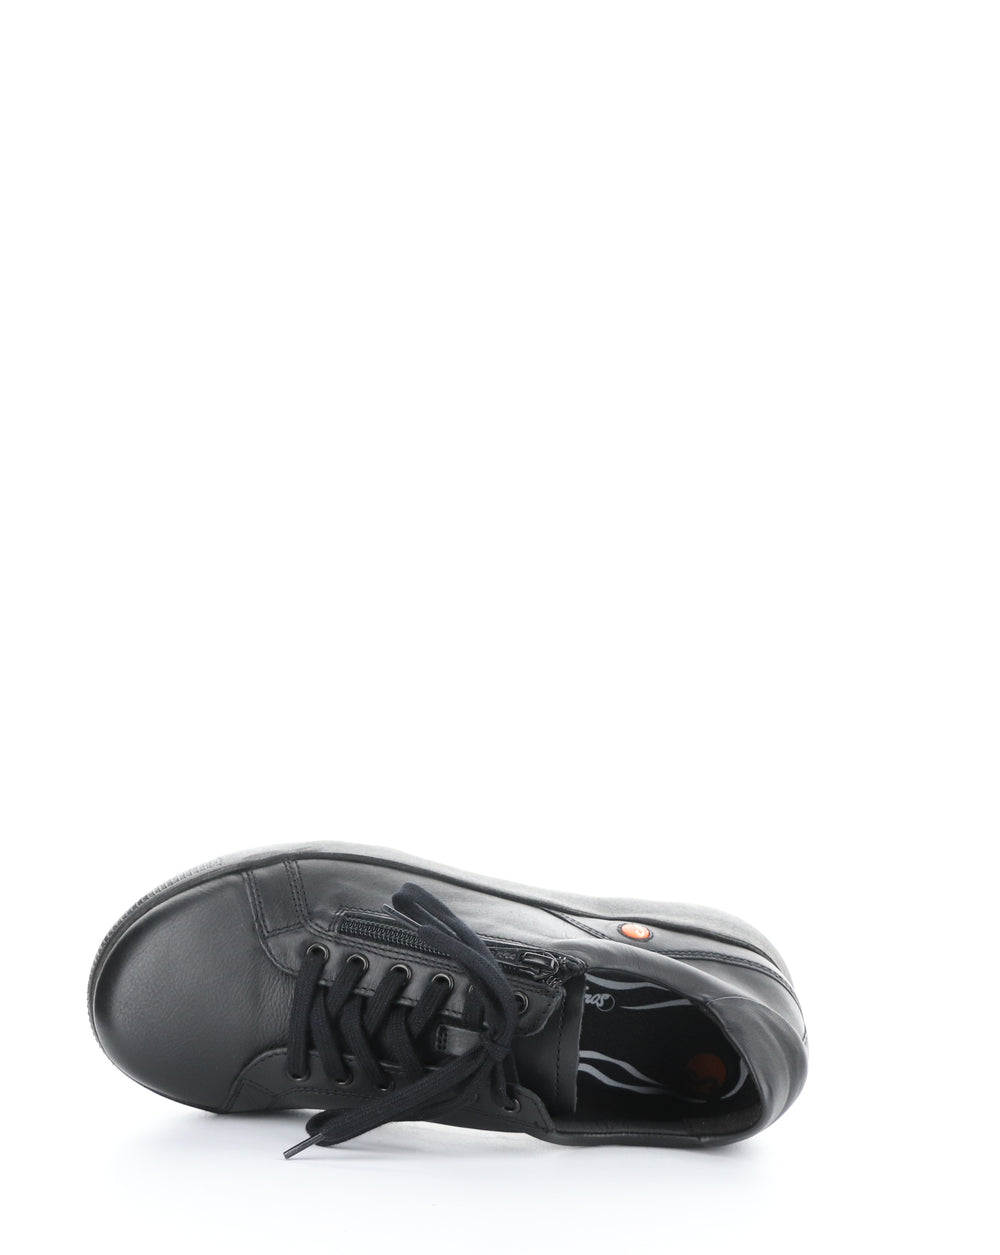 WHIZ719SOF 007 BLACK Lace-up Shoes